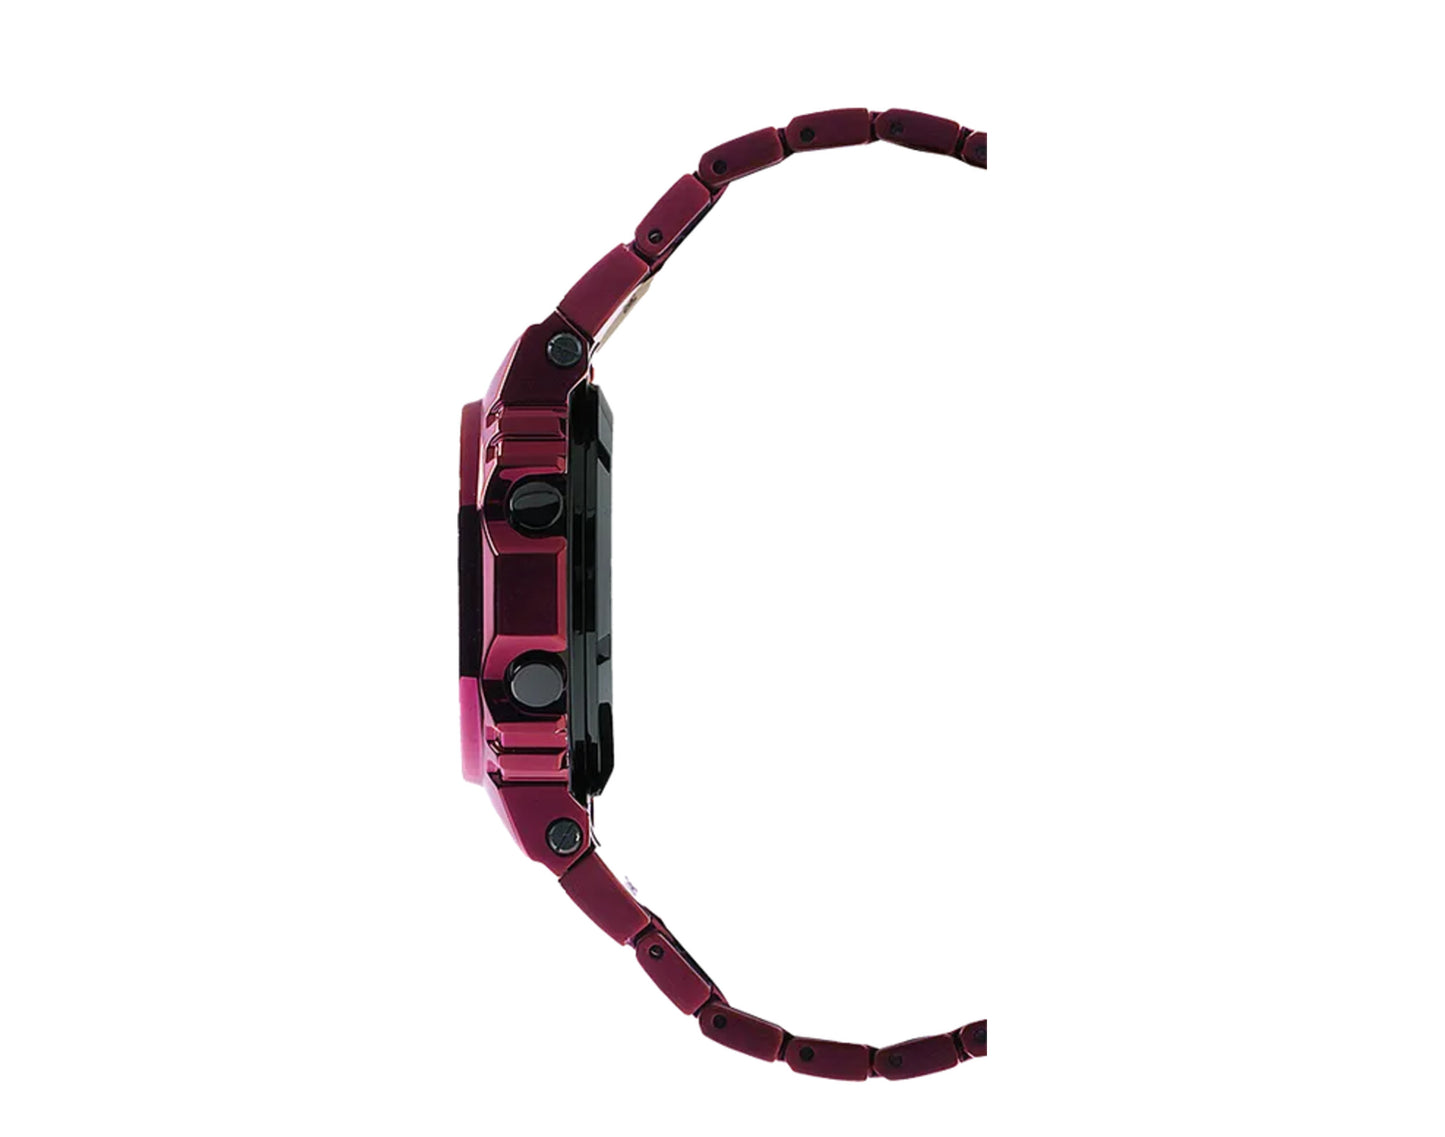 Casio G-Shock GMWB5000RD Digital Full Metal Men's Watch